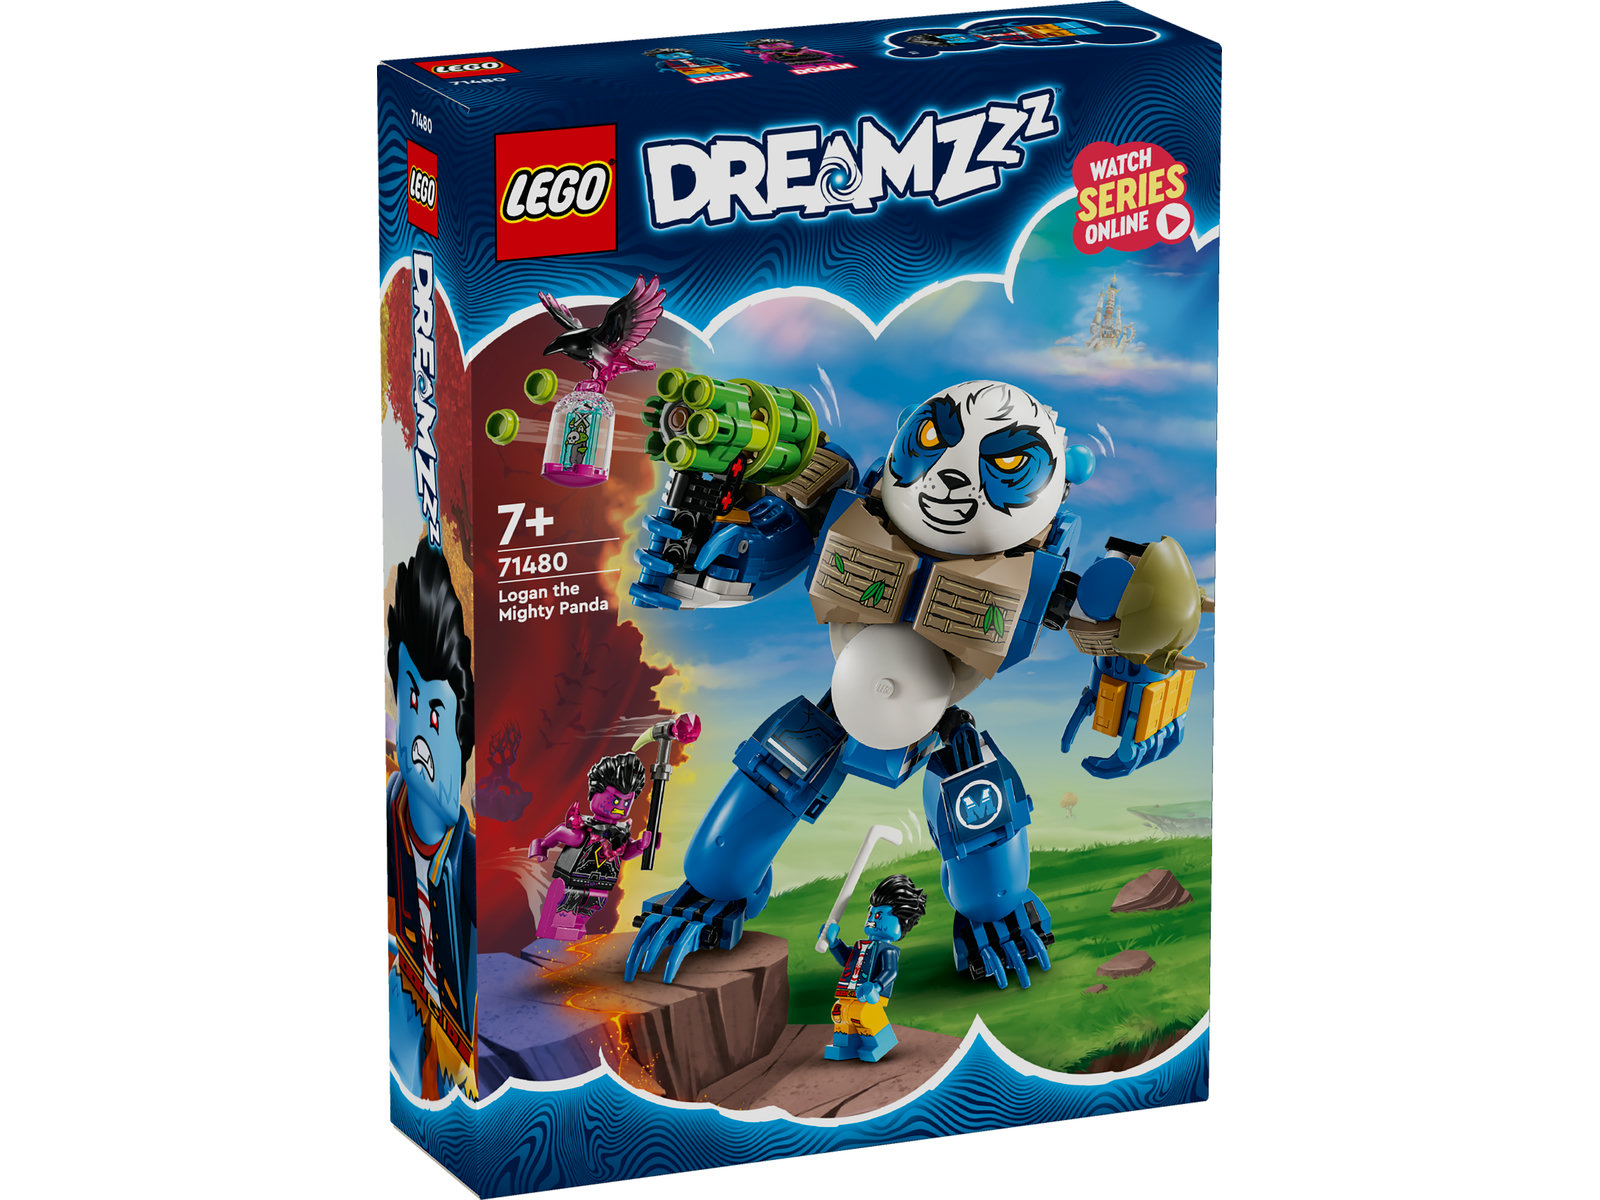 LEGO® DREAMZzz 71480 - Logan der mächtige Panda